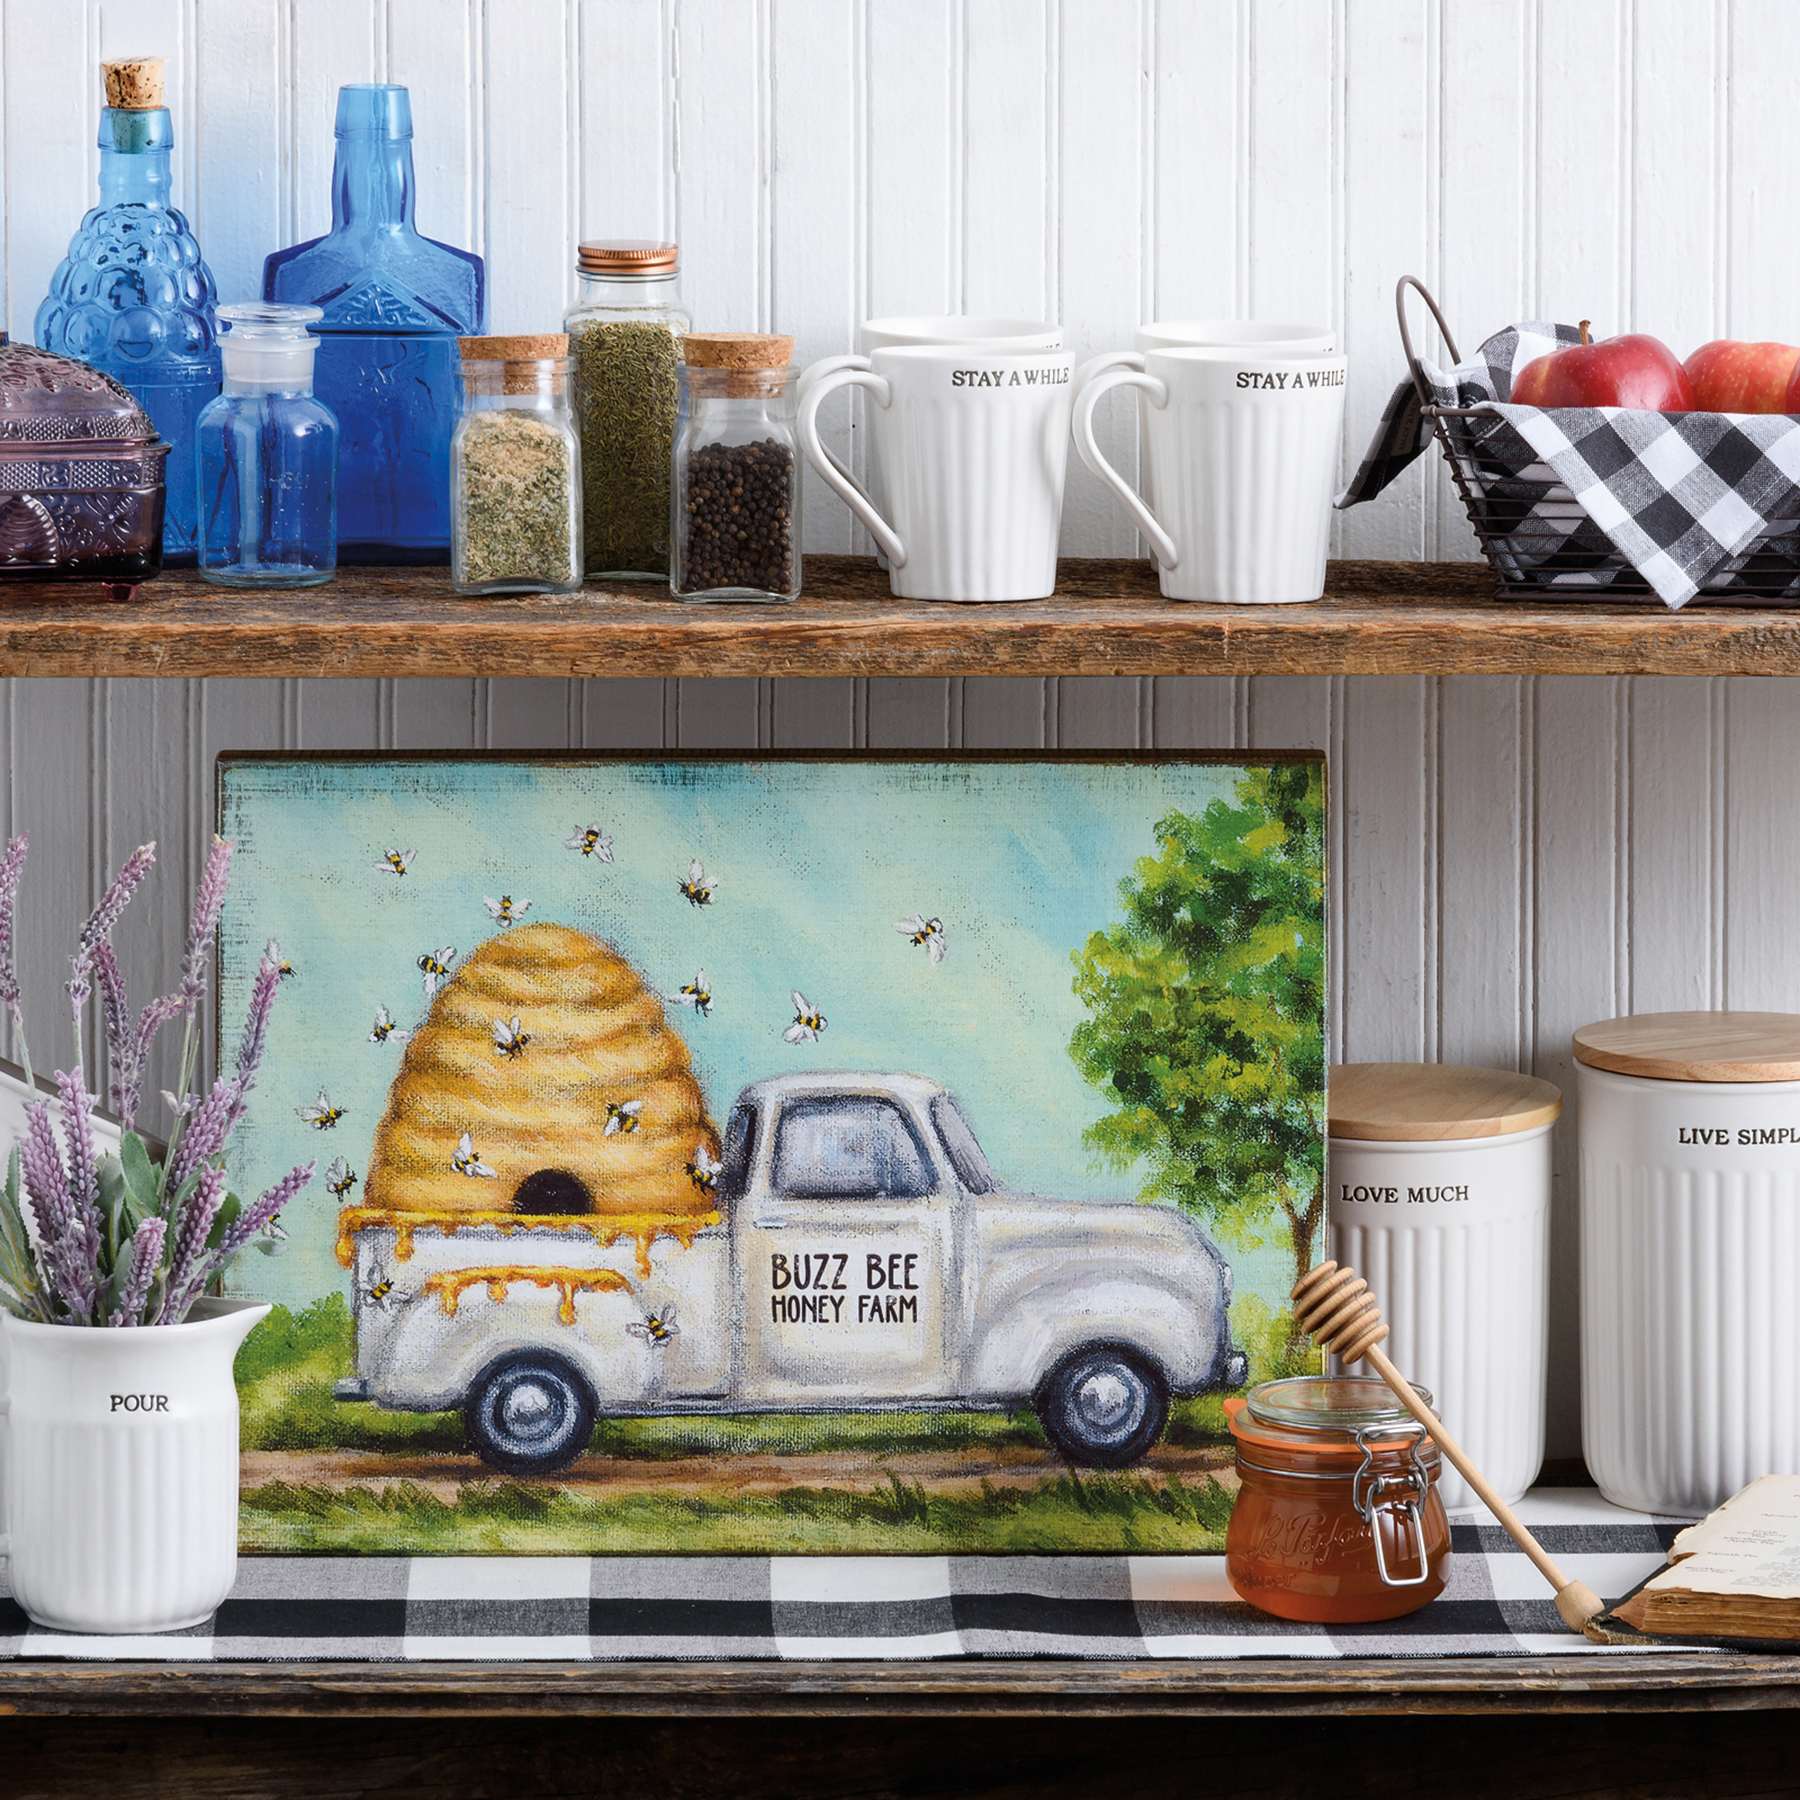 26 Bumblebee-Themed Kitchen Decor Ideas to Buzz About, LoveToKnow